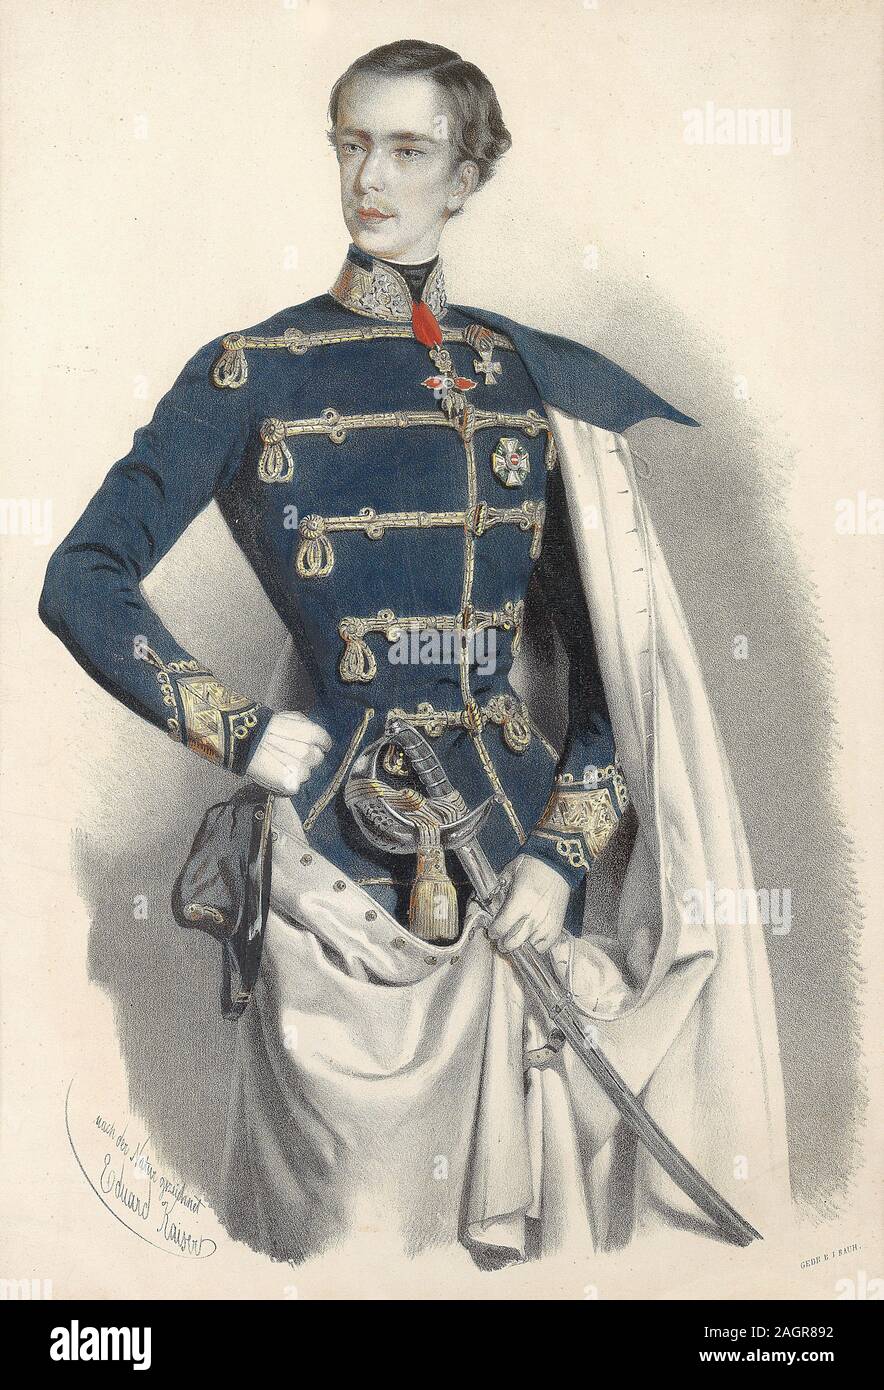 Portrait of Emperor Franz Joseph I of Austria, in Hungarian uniform. Museum: PRIVATE COLLECTION. Author: EDUARD KAISER. Stock Photo